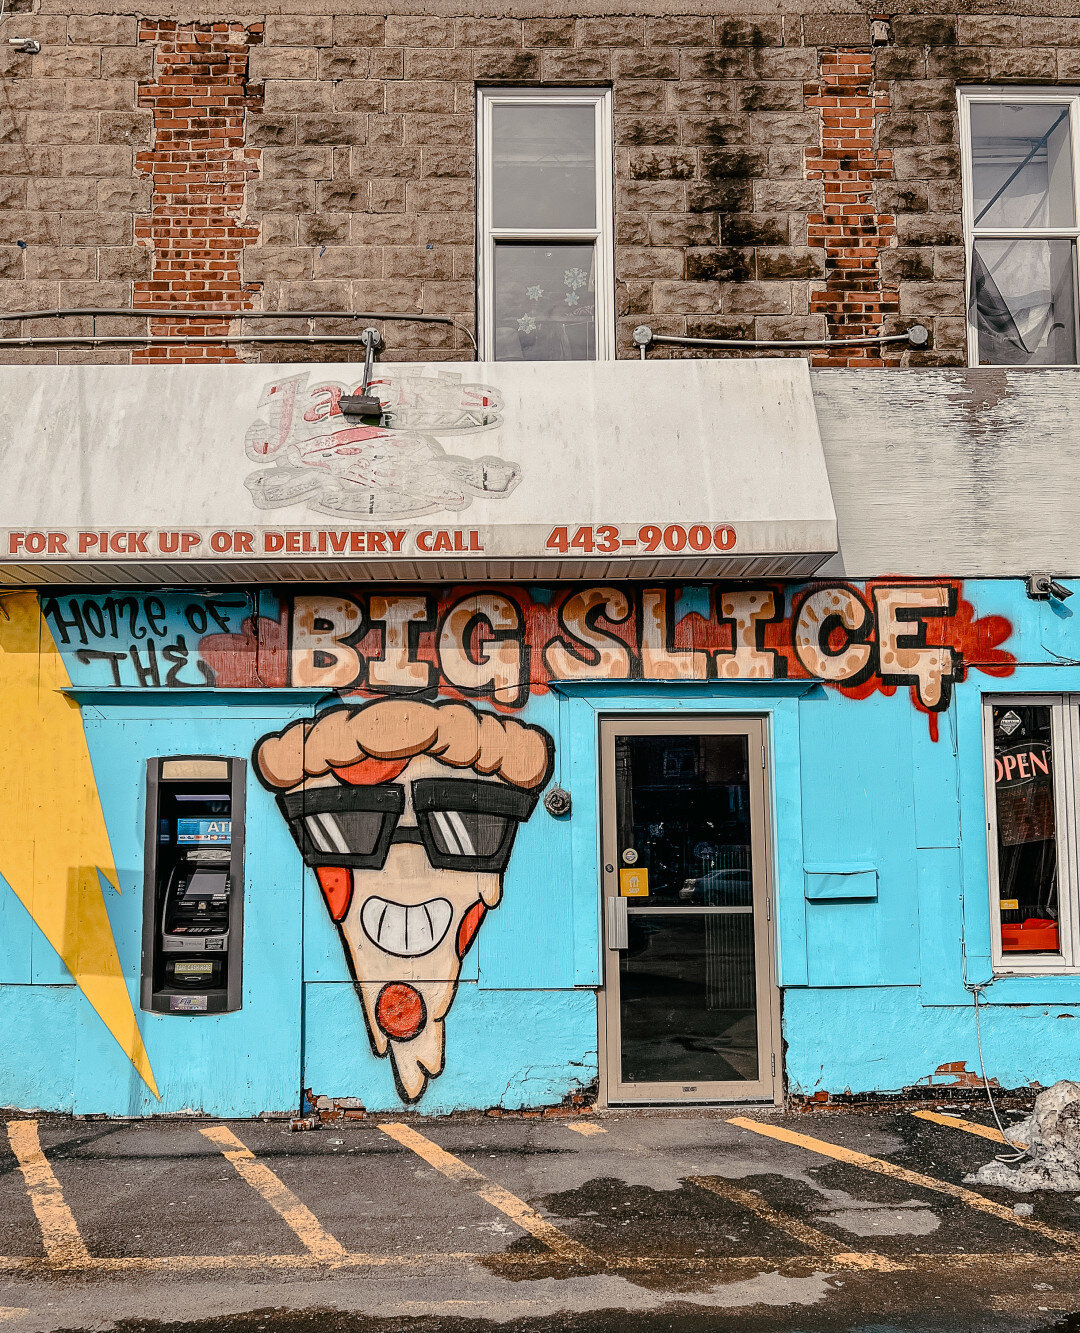 The Big Slice

📷 @katebraydon

#mondaymuse #bigslice #fredericton #pizza #latenightpizza #tannery #thetannery